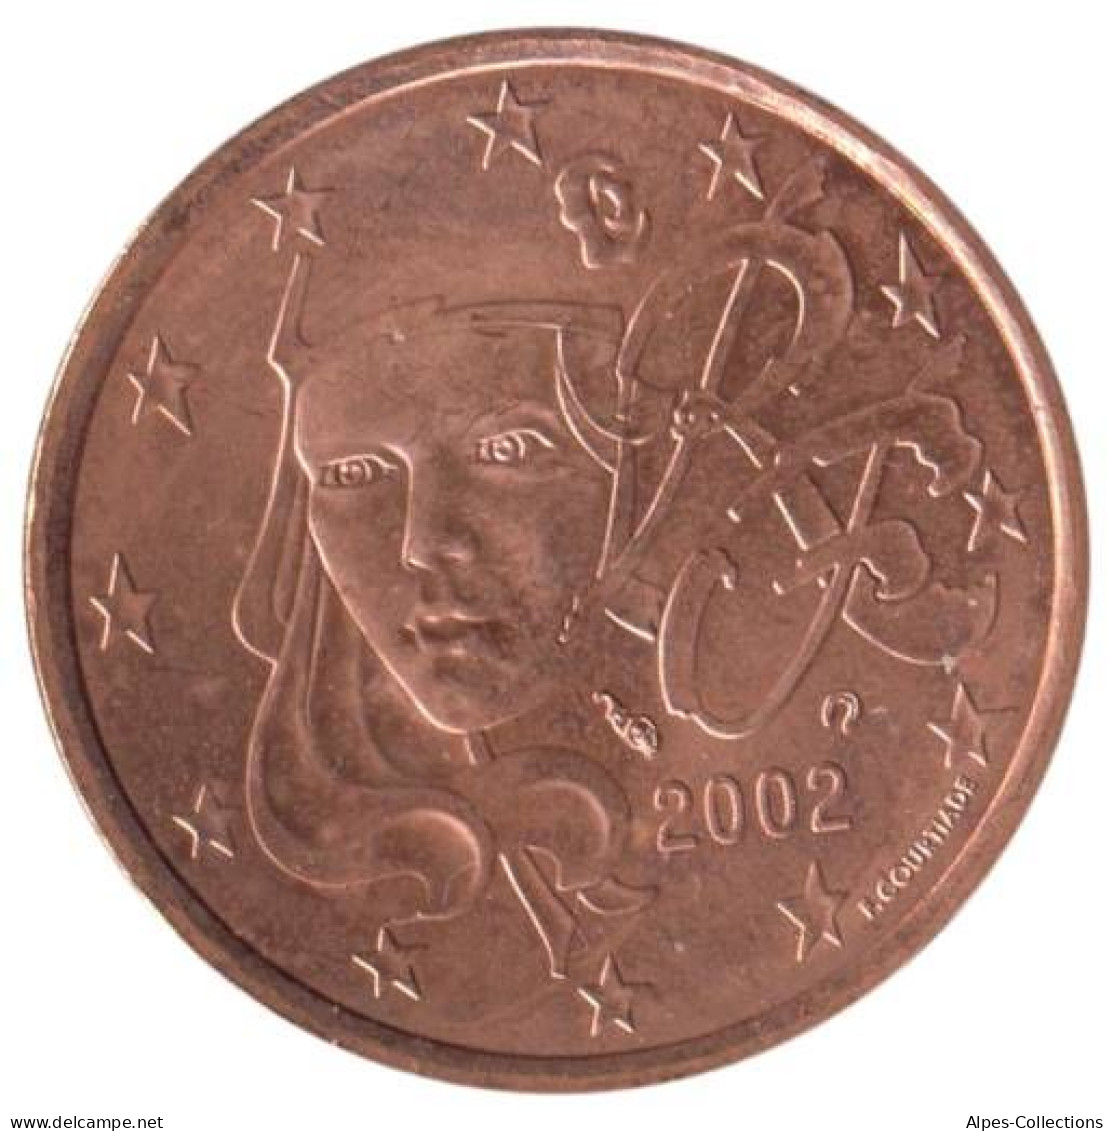 FR00502.1 - FRANCE - 5 Cents - 2002 - Francia